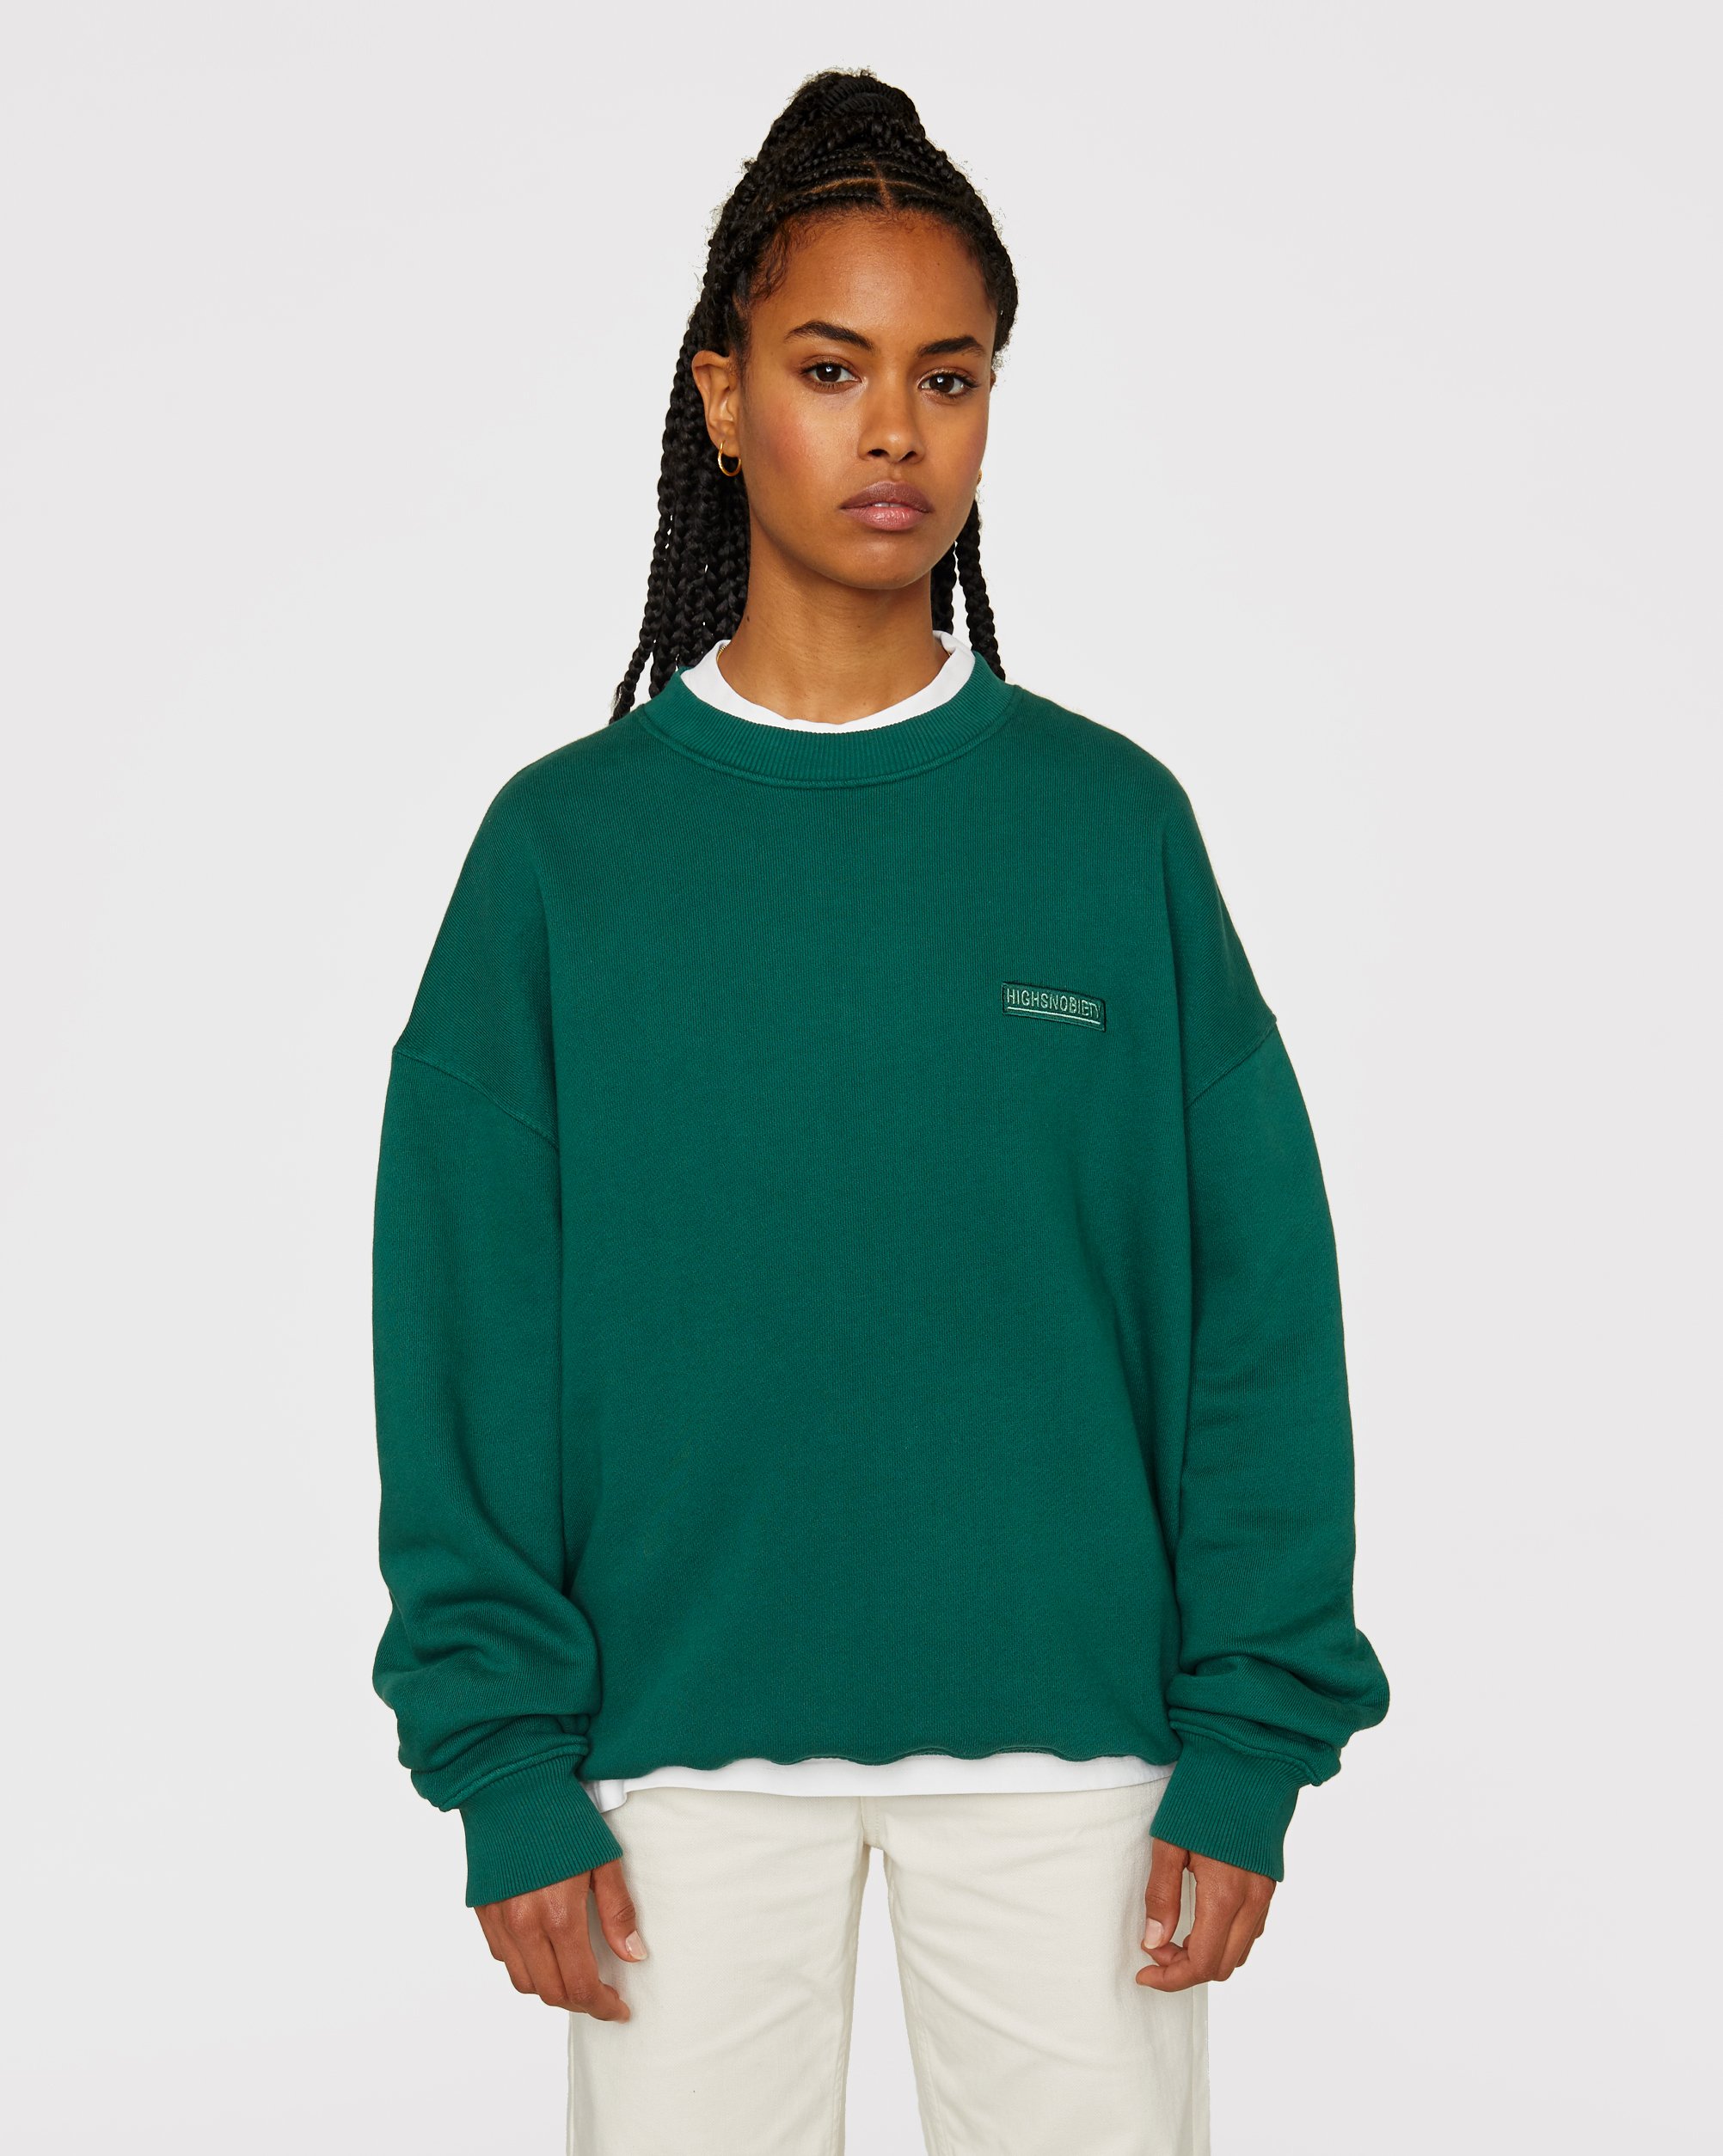 Highsnobiety - Staples Sweatshirt Green - Clothing - Green - Image 6